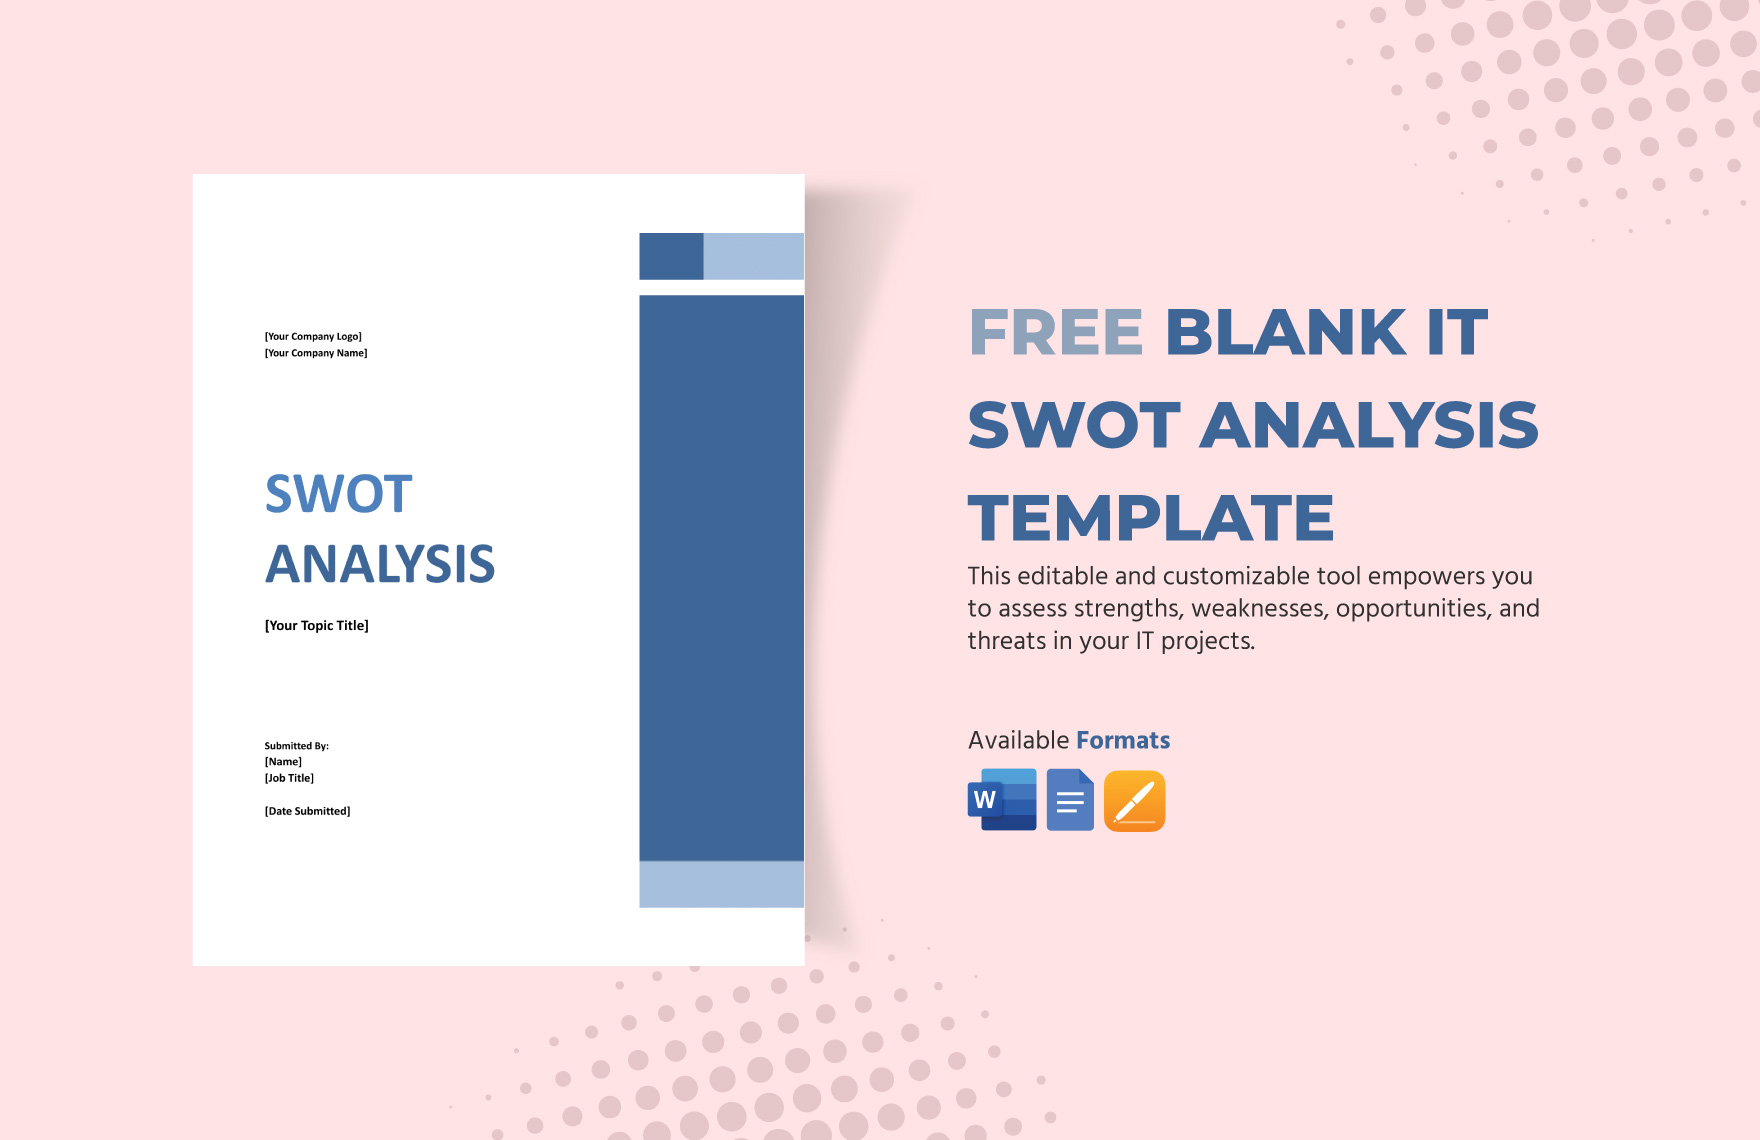 Blank IT SWOT Analysis Template